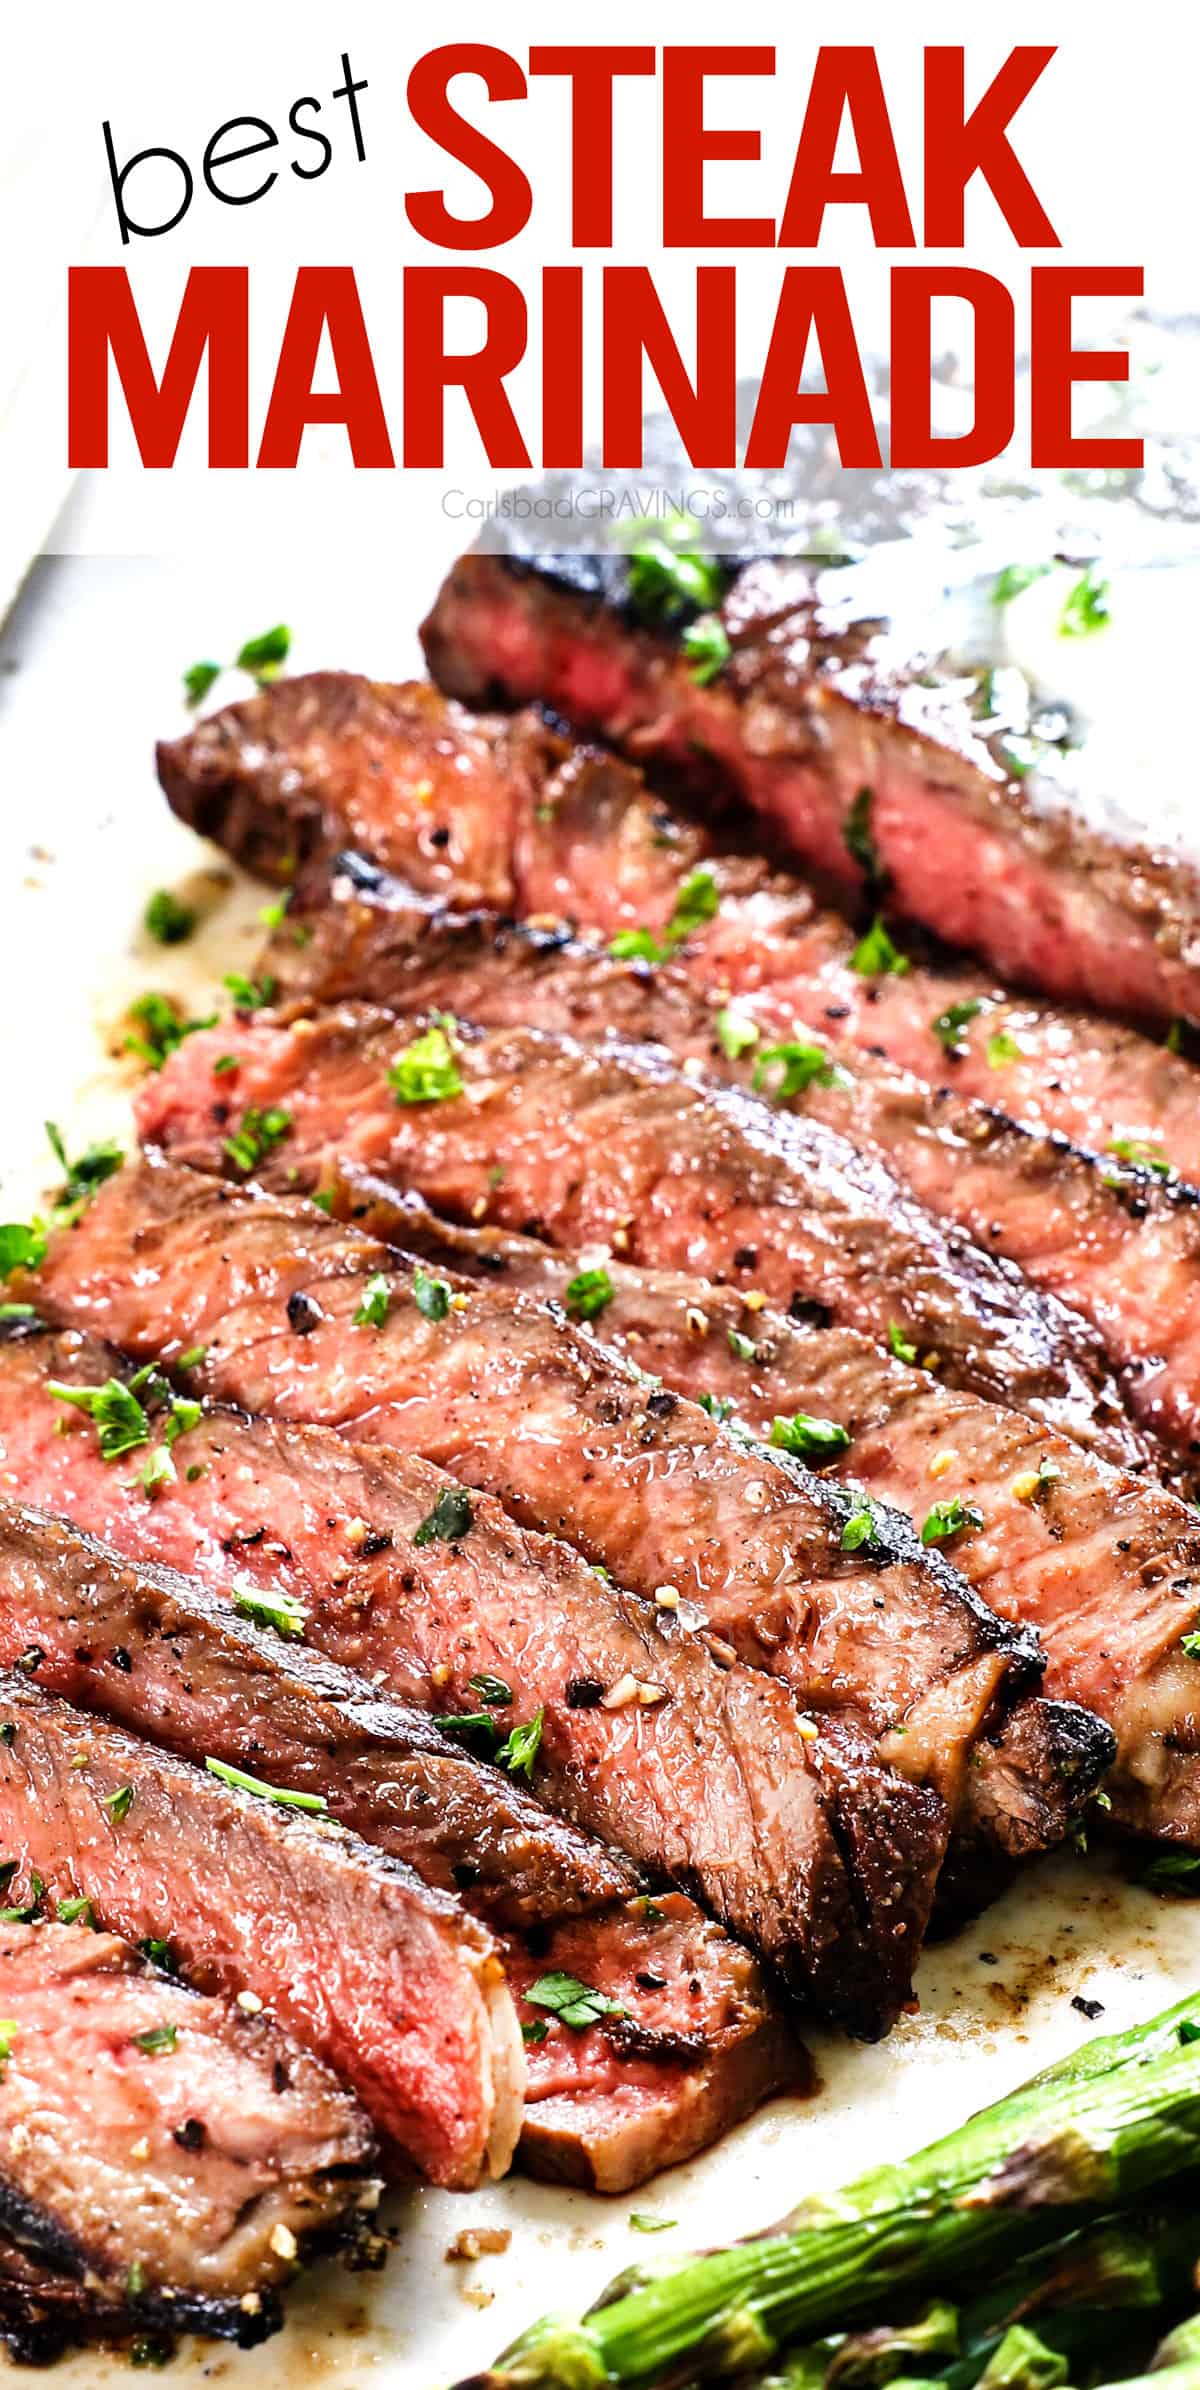 steak marinade on a cutting board showing how juicy the steak is